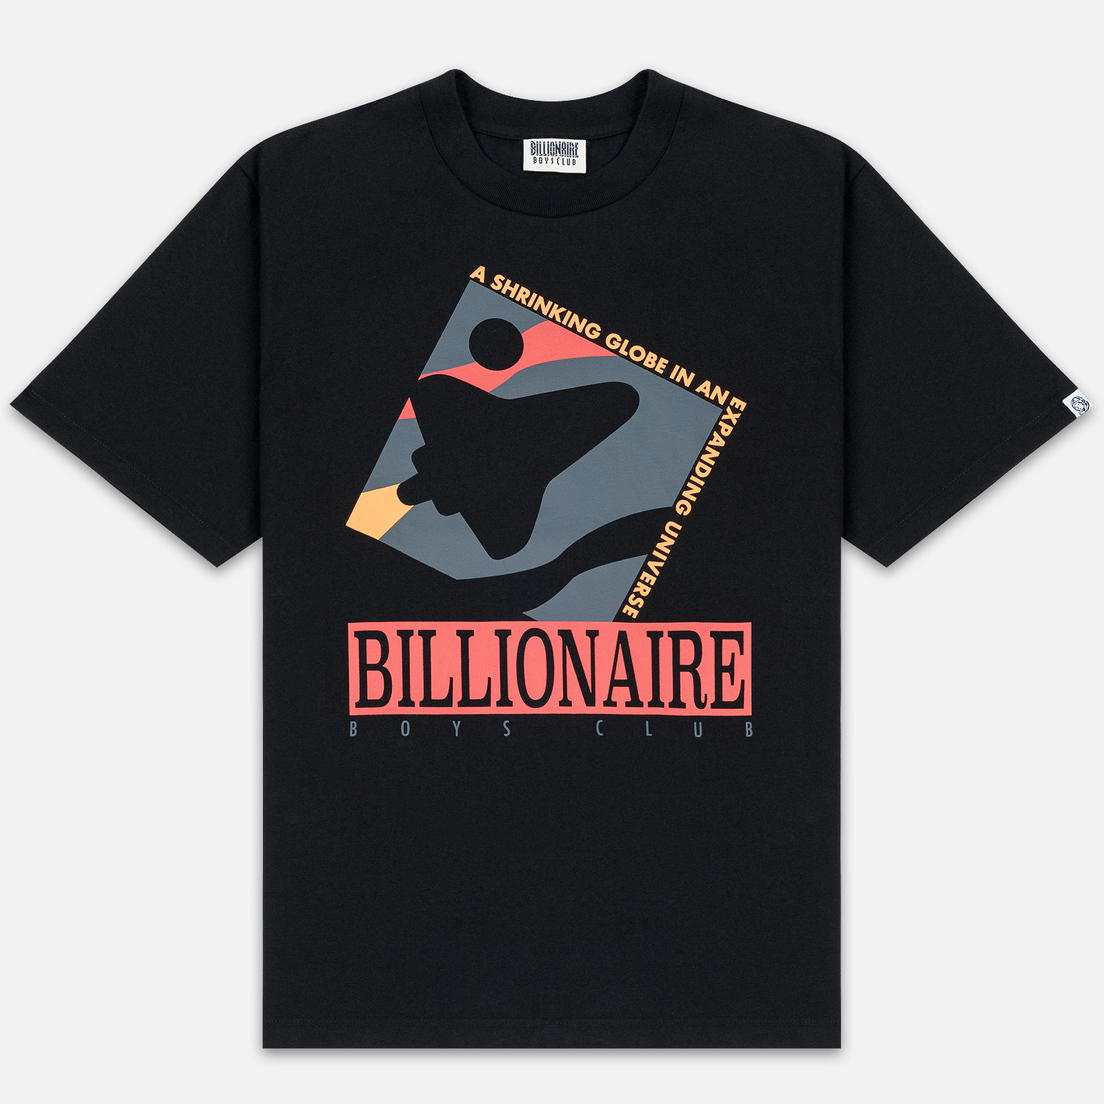 Billionaire Boys Club Мужская футболка Commemorative Mission